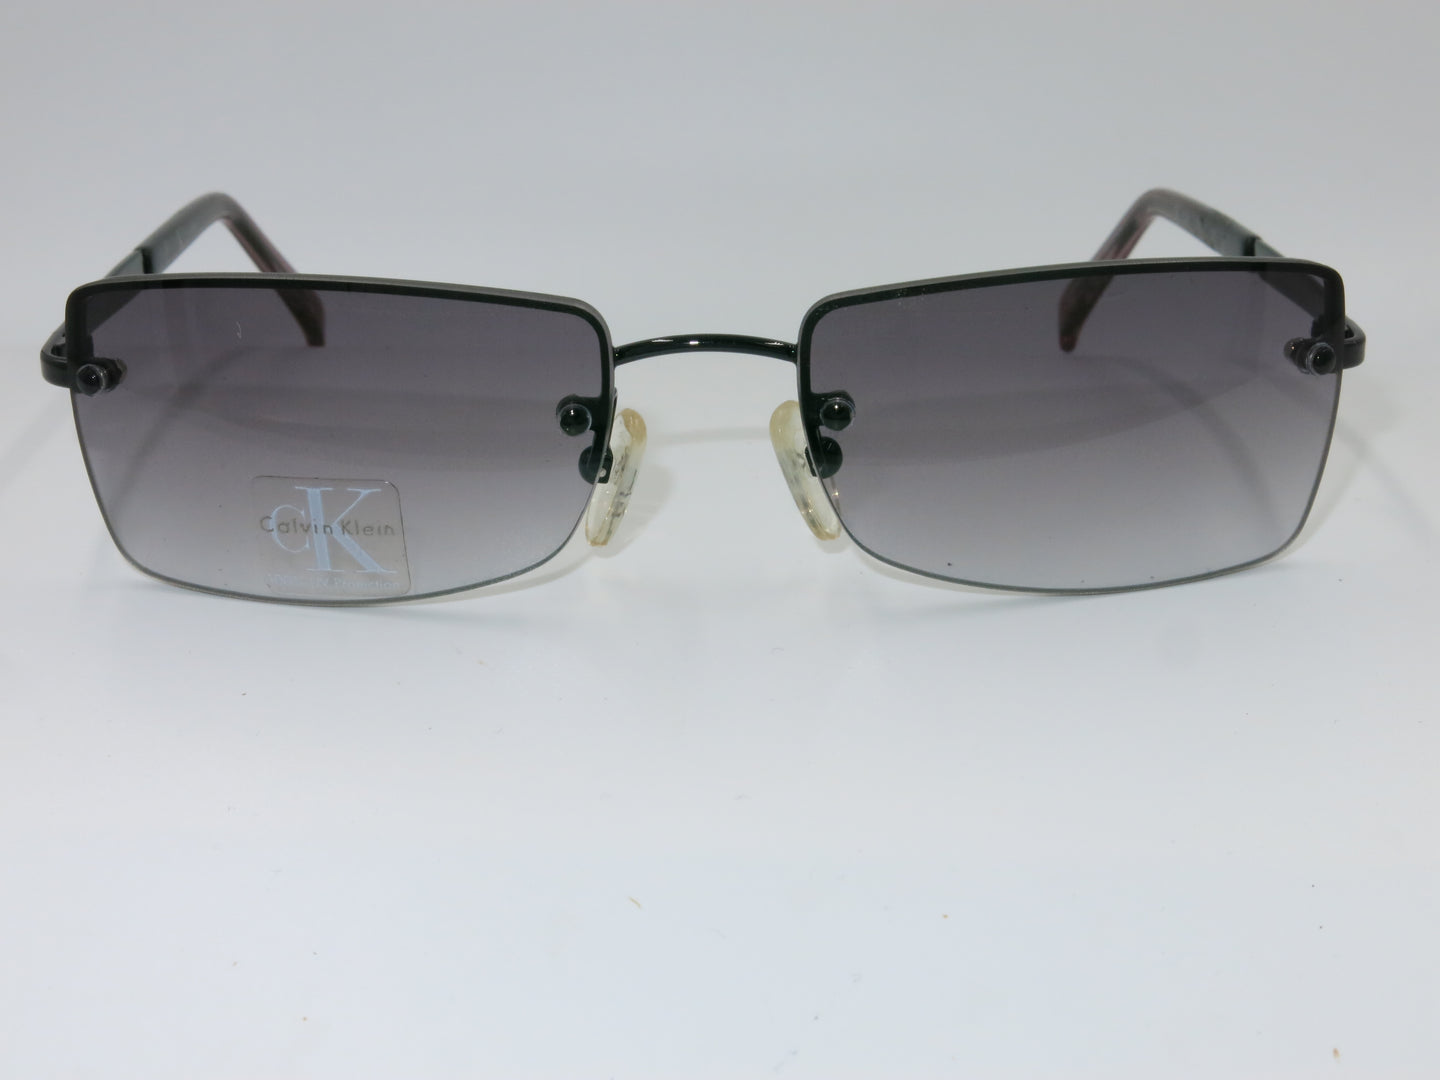 Calvin Klein Sunglasses 1042